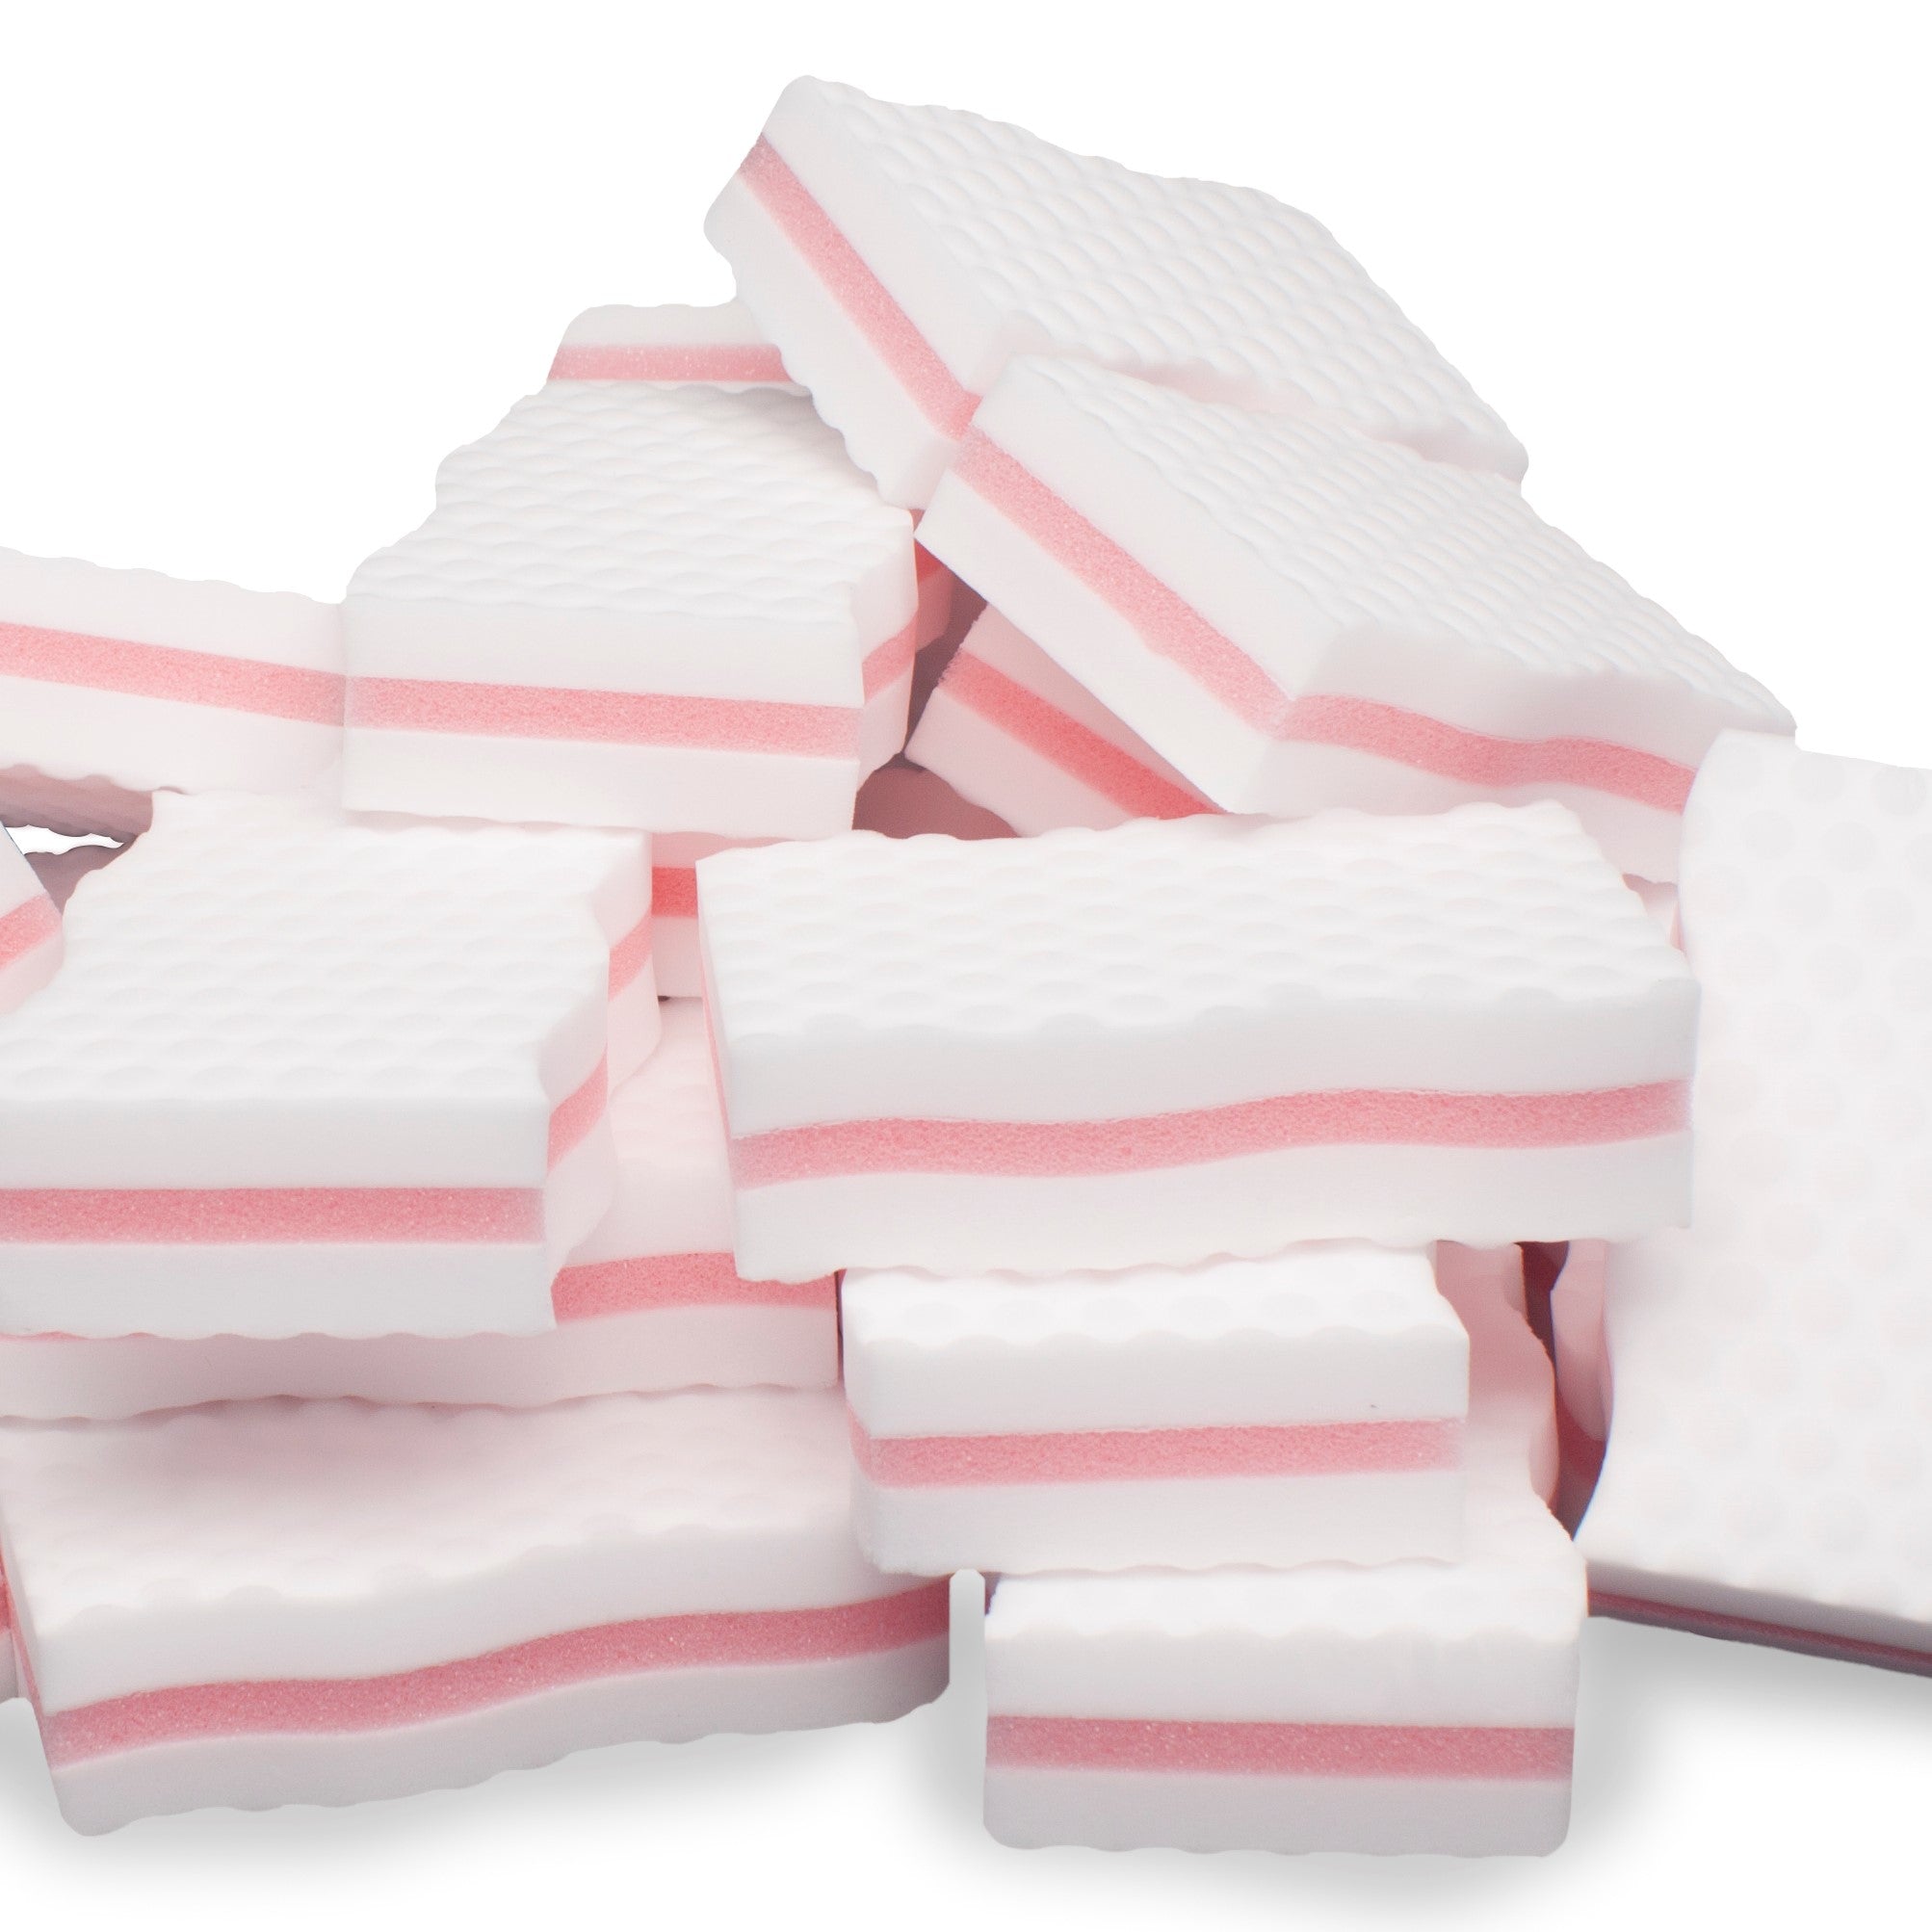 LTWHOME Cuty Pink Interlayer Magic Cleaning Wave Type Sponge High Density Melamine Foam 3.93 Inch X 2.36 Inch X 1 Inch (Pack of 50)